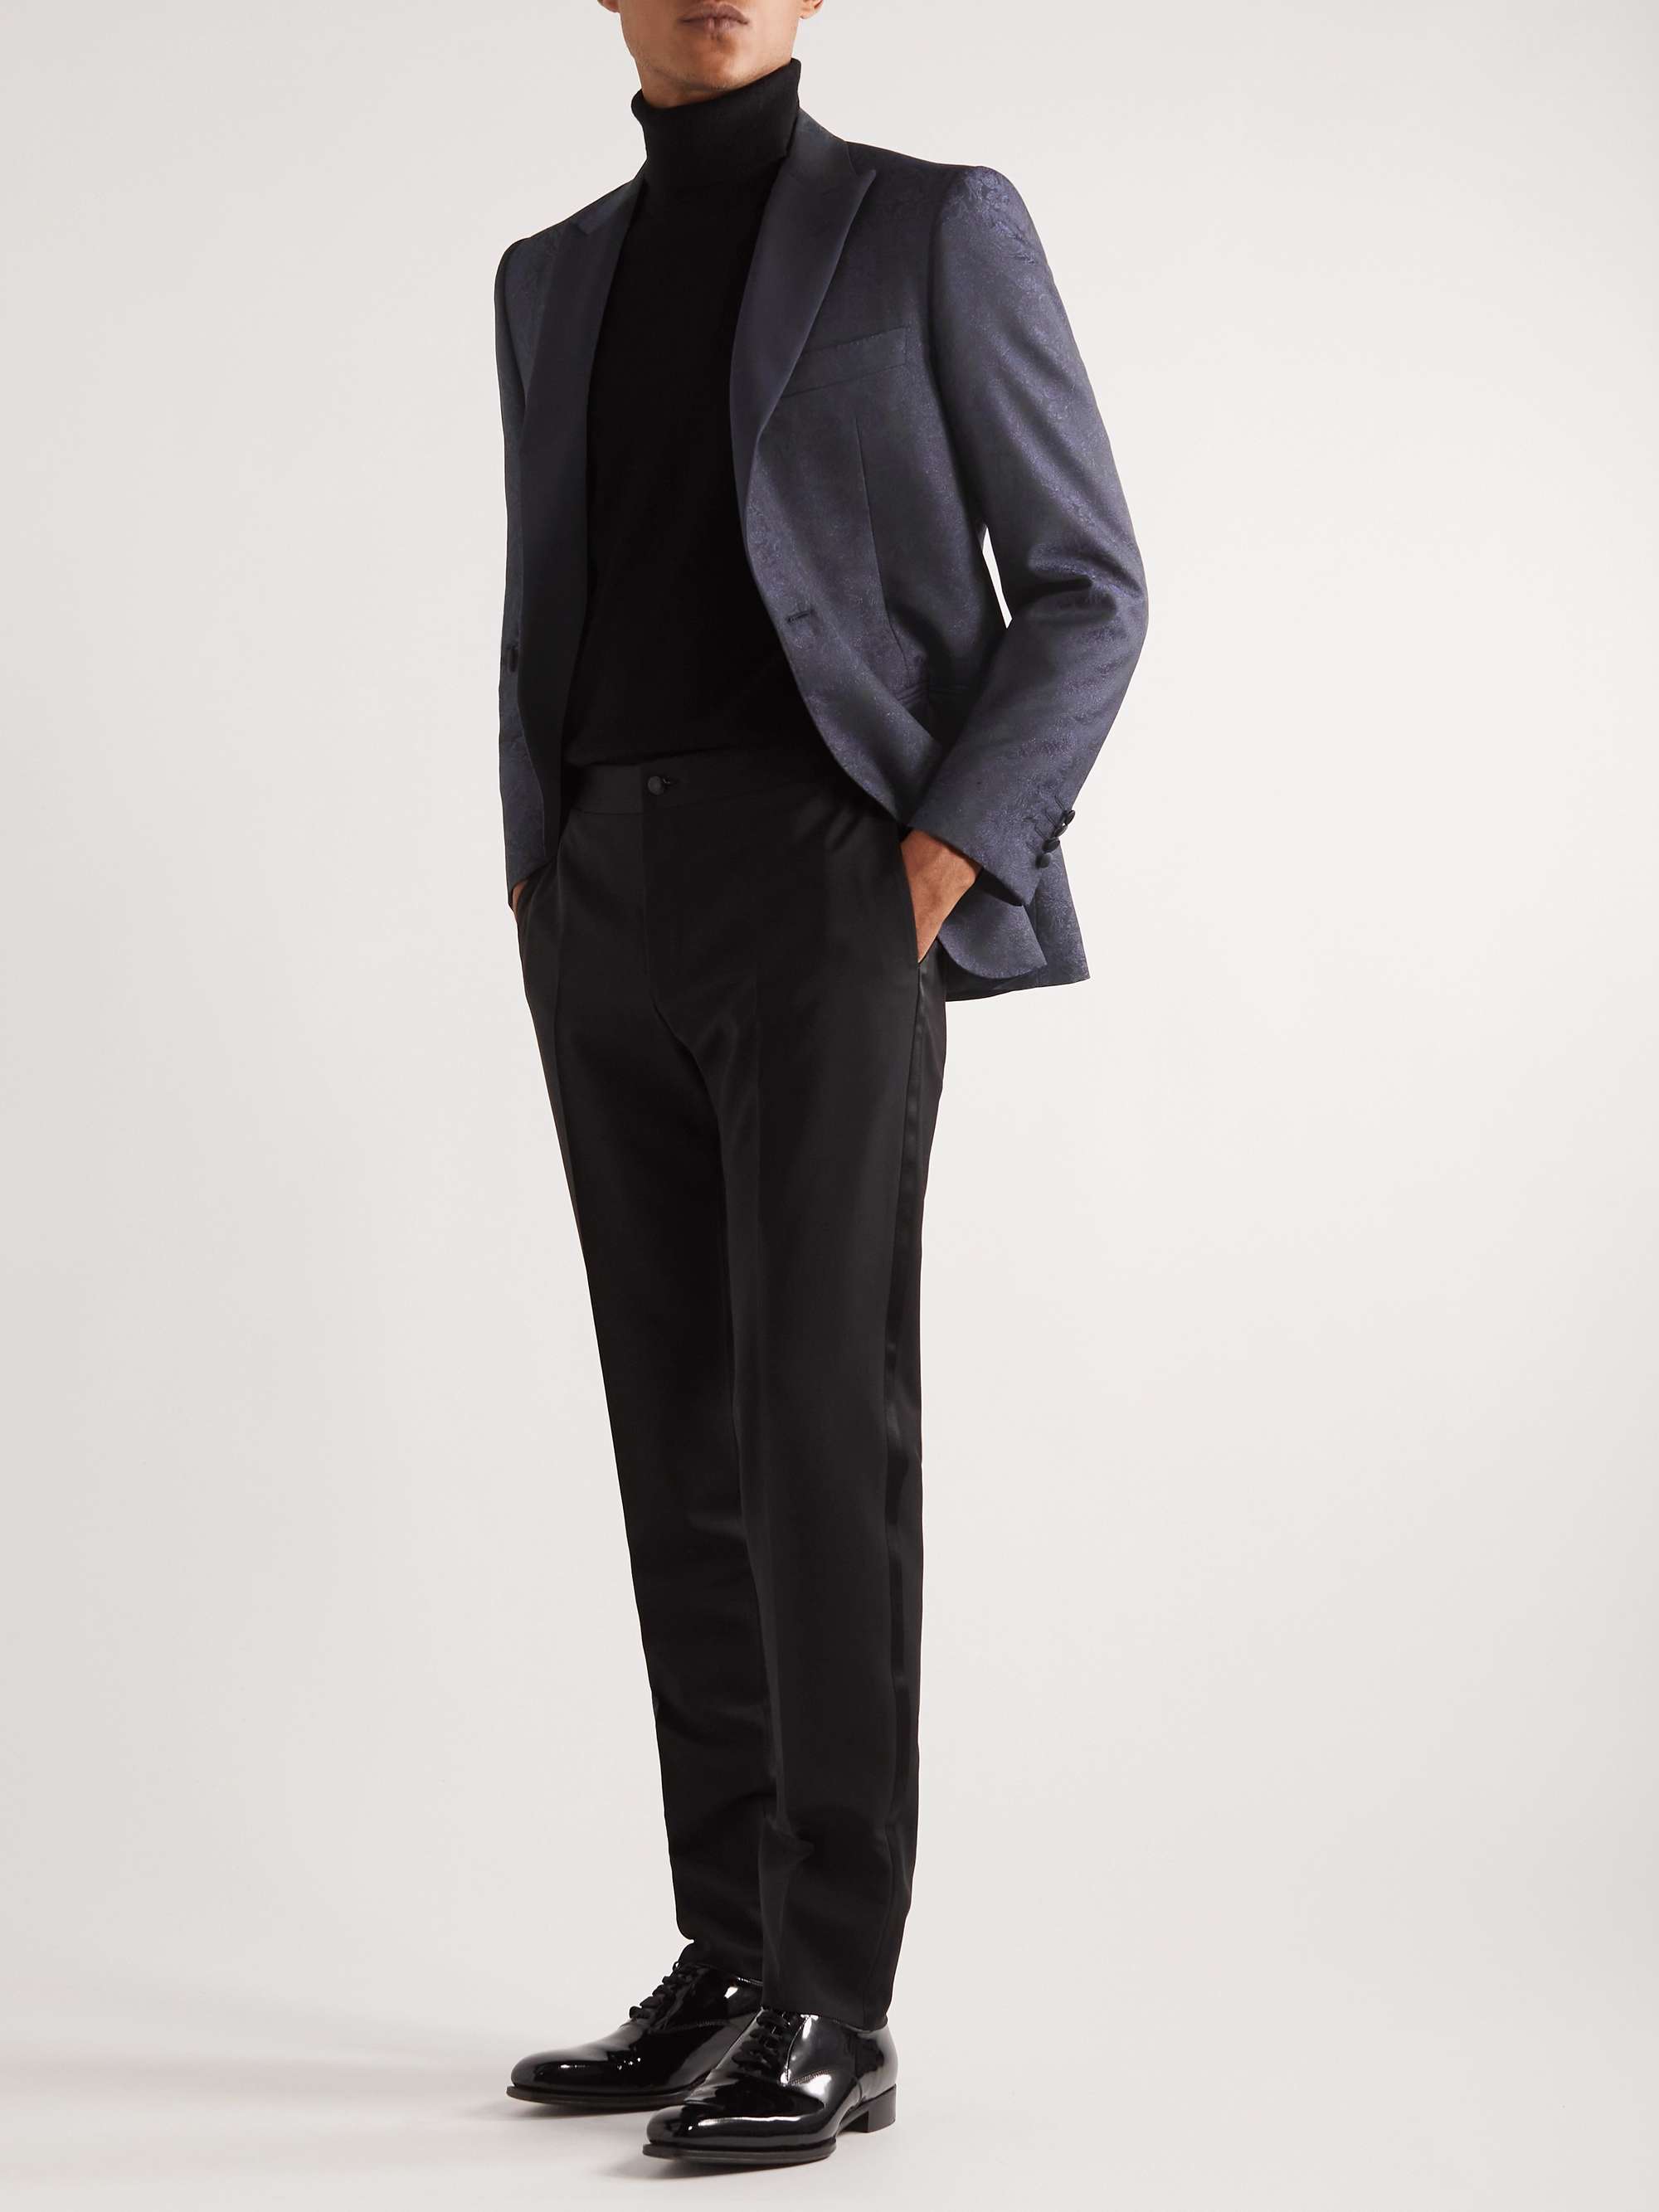 CANALI Slim-Fit Metallic Jacquard Tuxedo Jacket for Men | MR PORTER